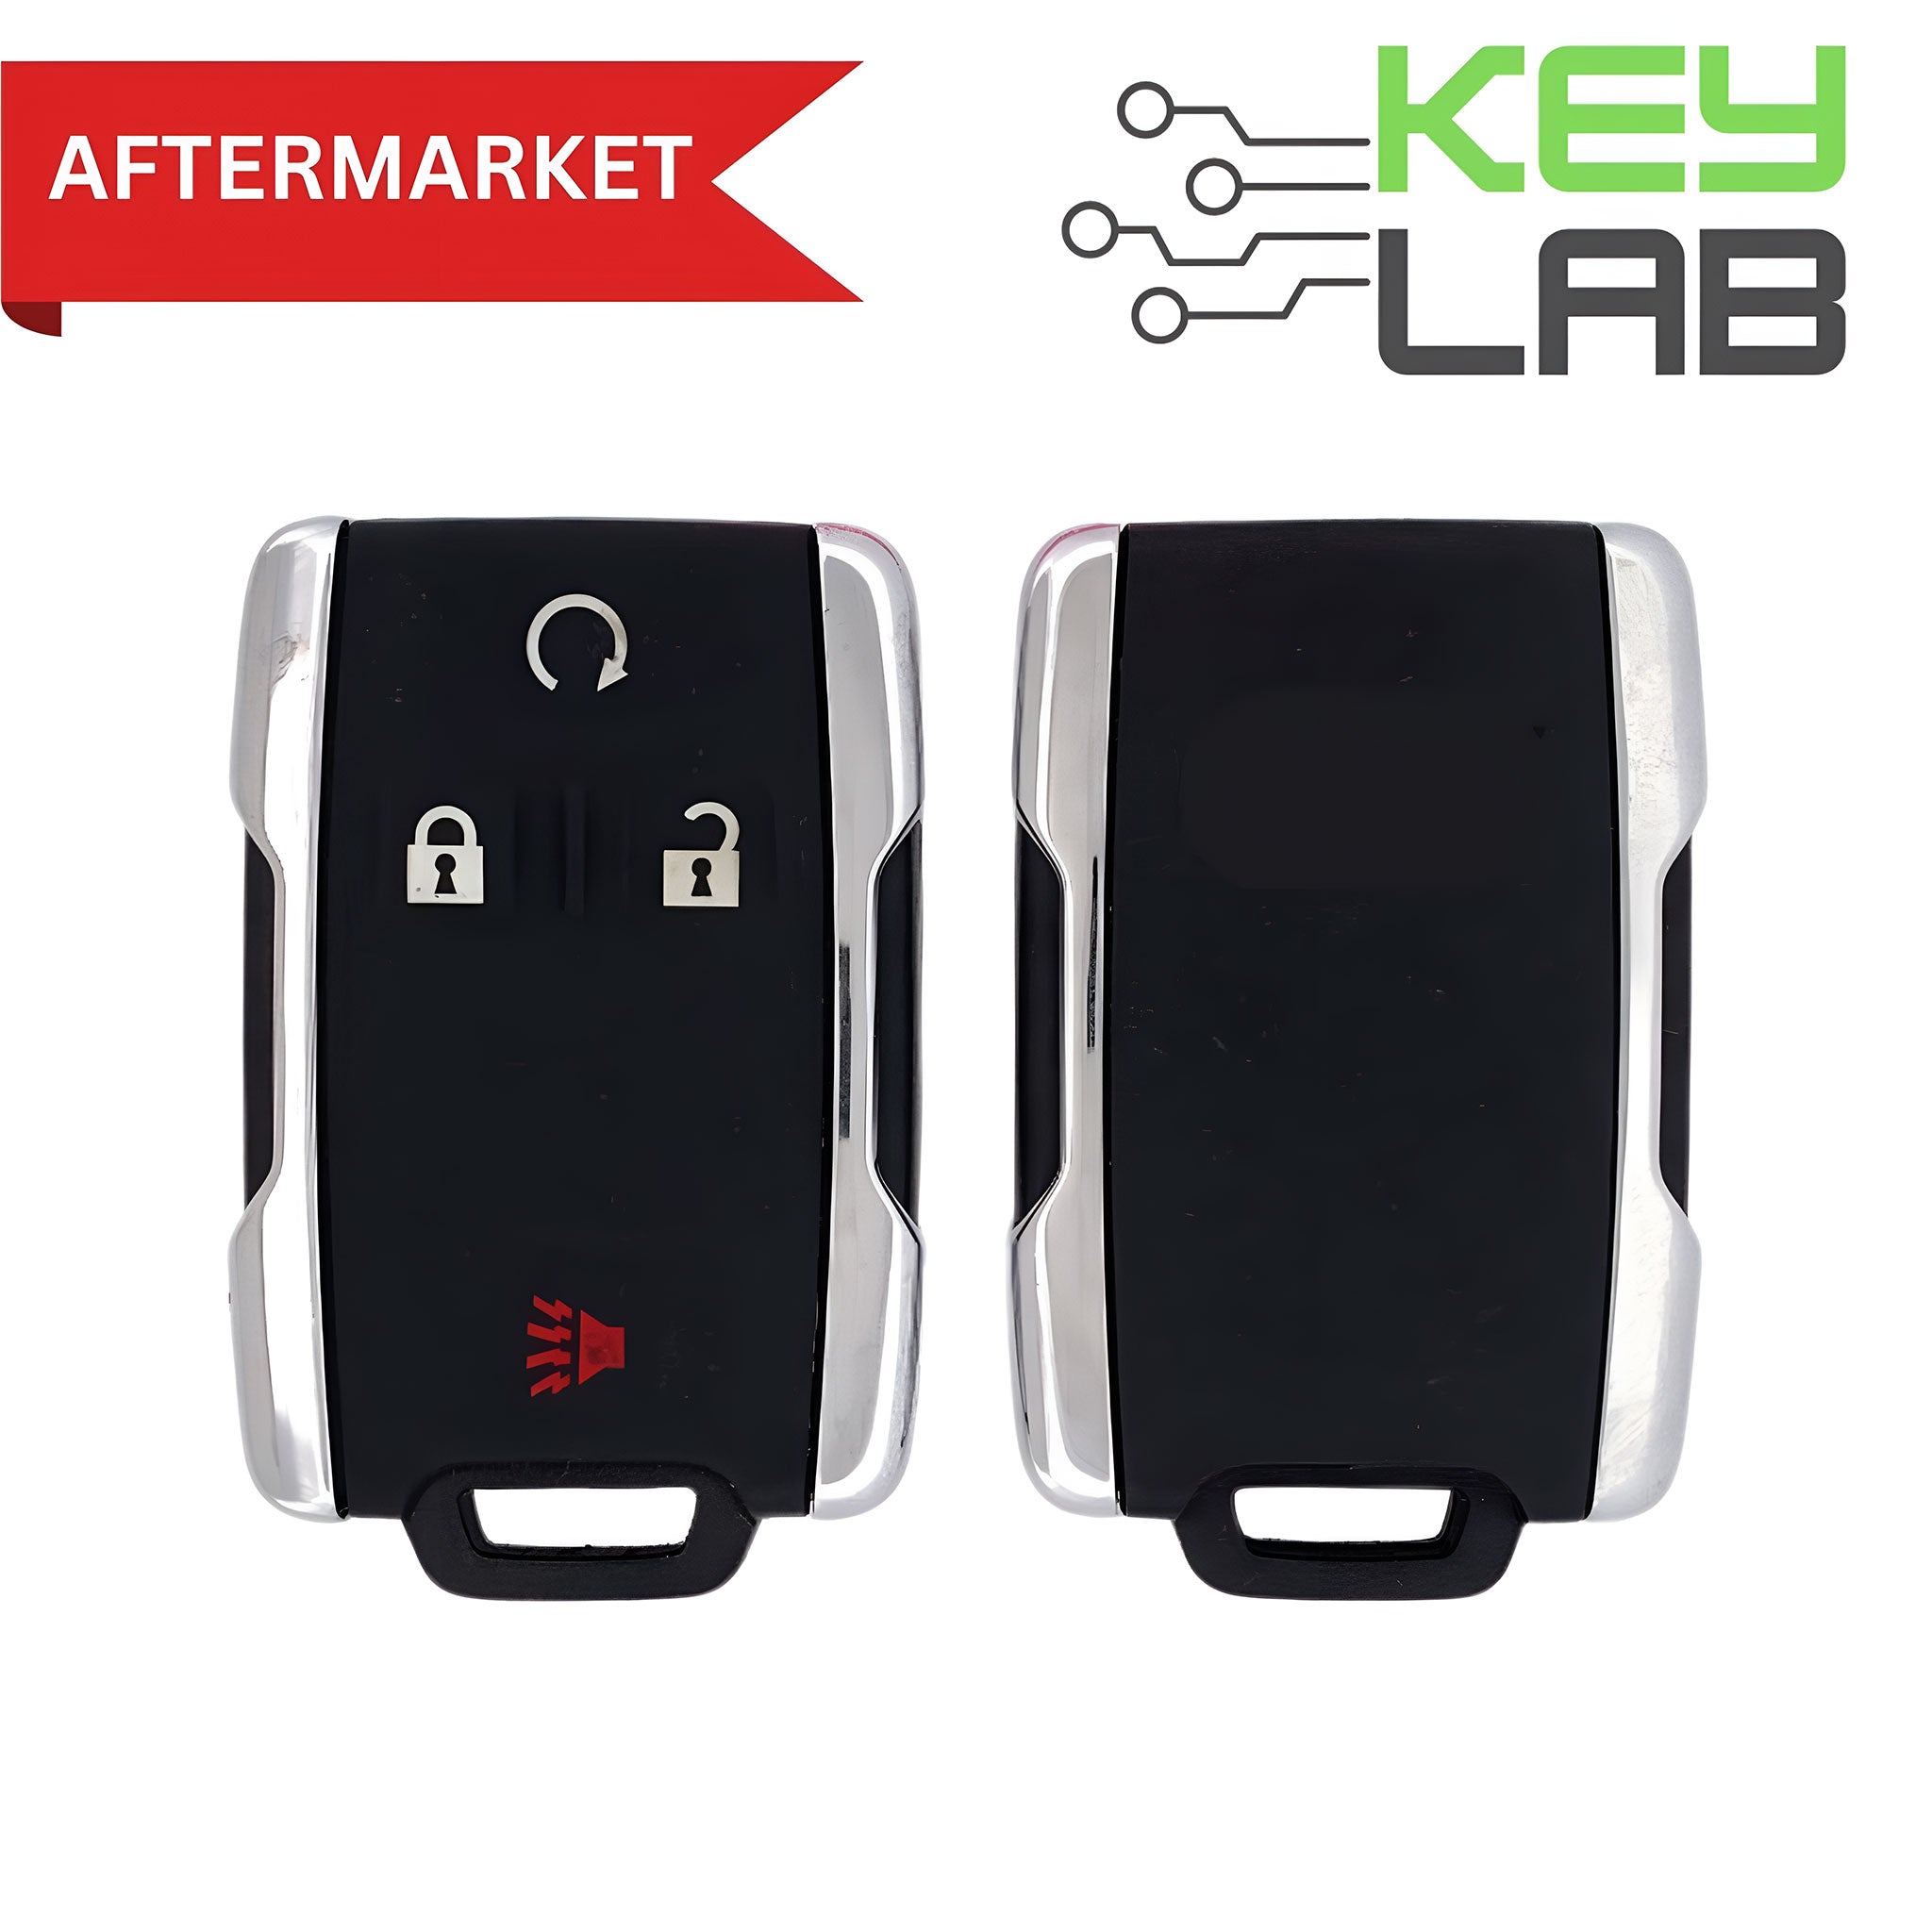 Chevrolet Aftermarket 2014-2022 Silverado, Colorado Keyless Entry Remote 4B Remote Start FCCID: M3N32337100 PN# 13577770 - Royal Key Supply